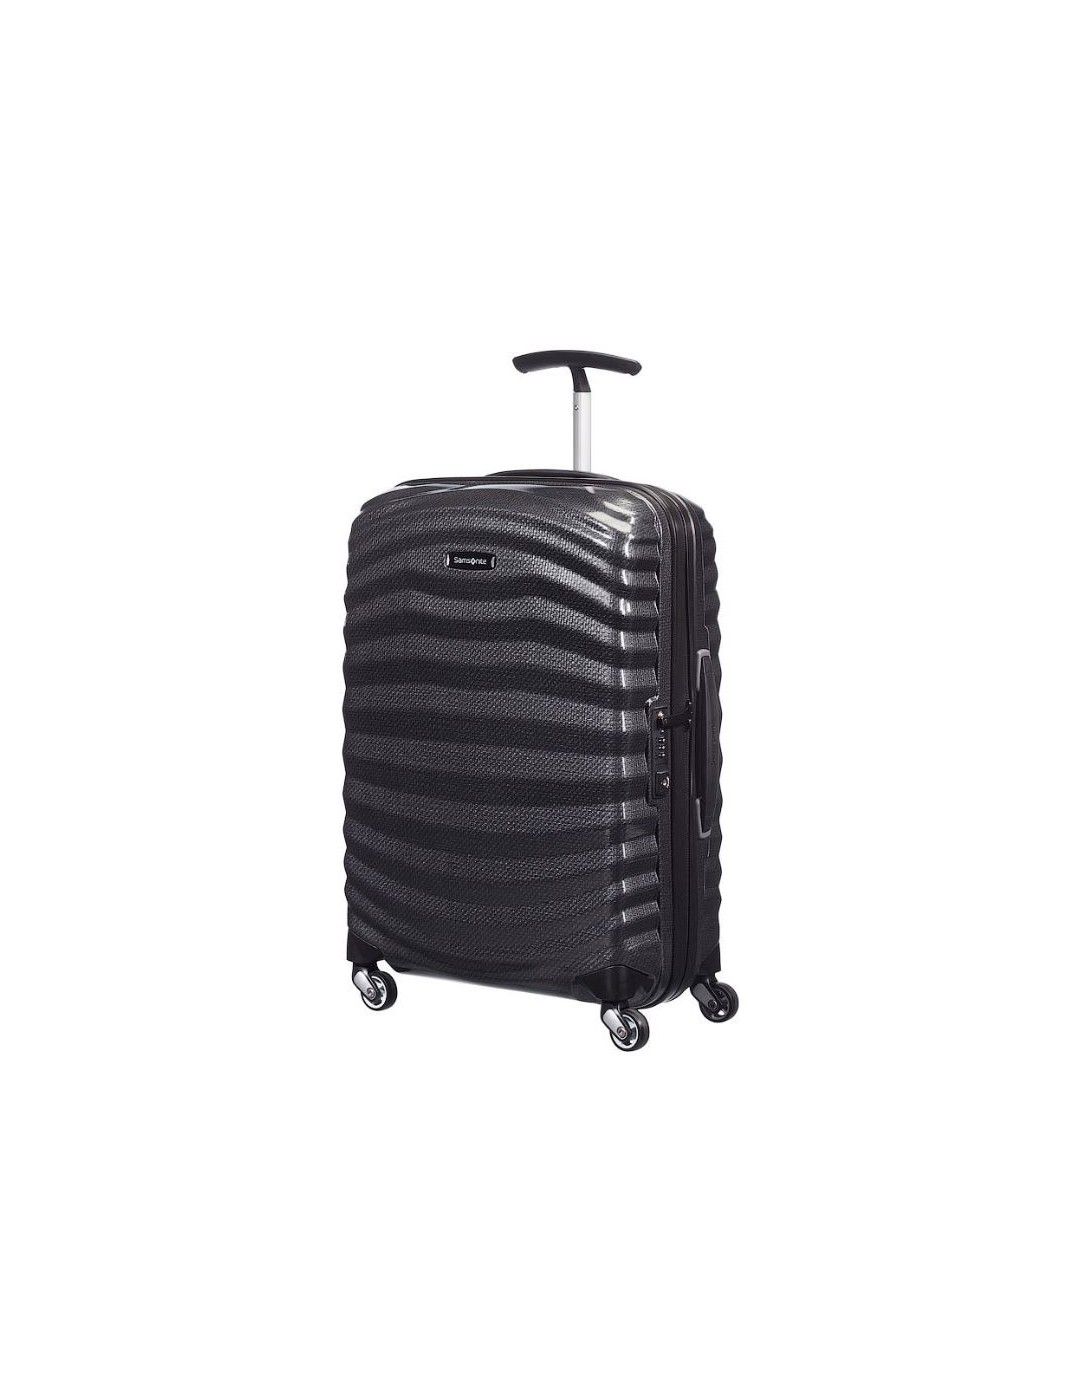 Samsonite Lite Shock 55 4 wheel carry-on luggage black